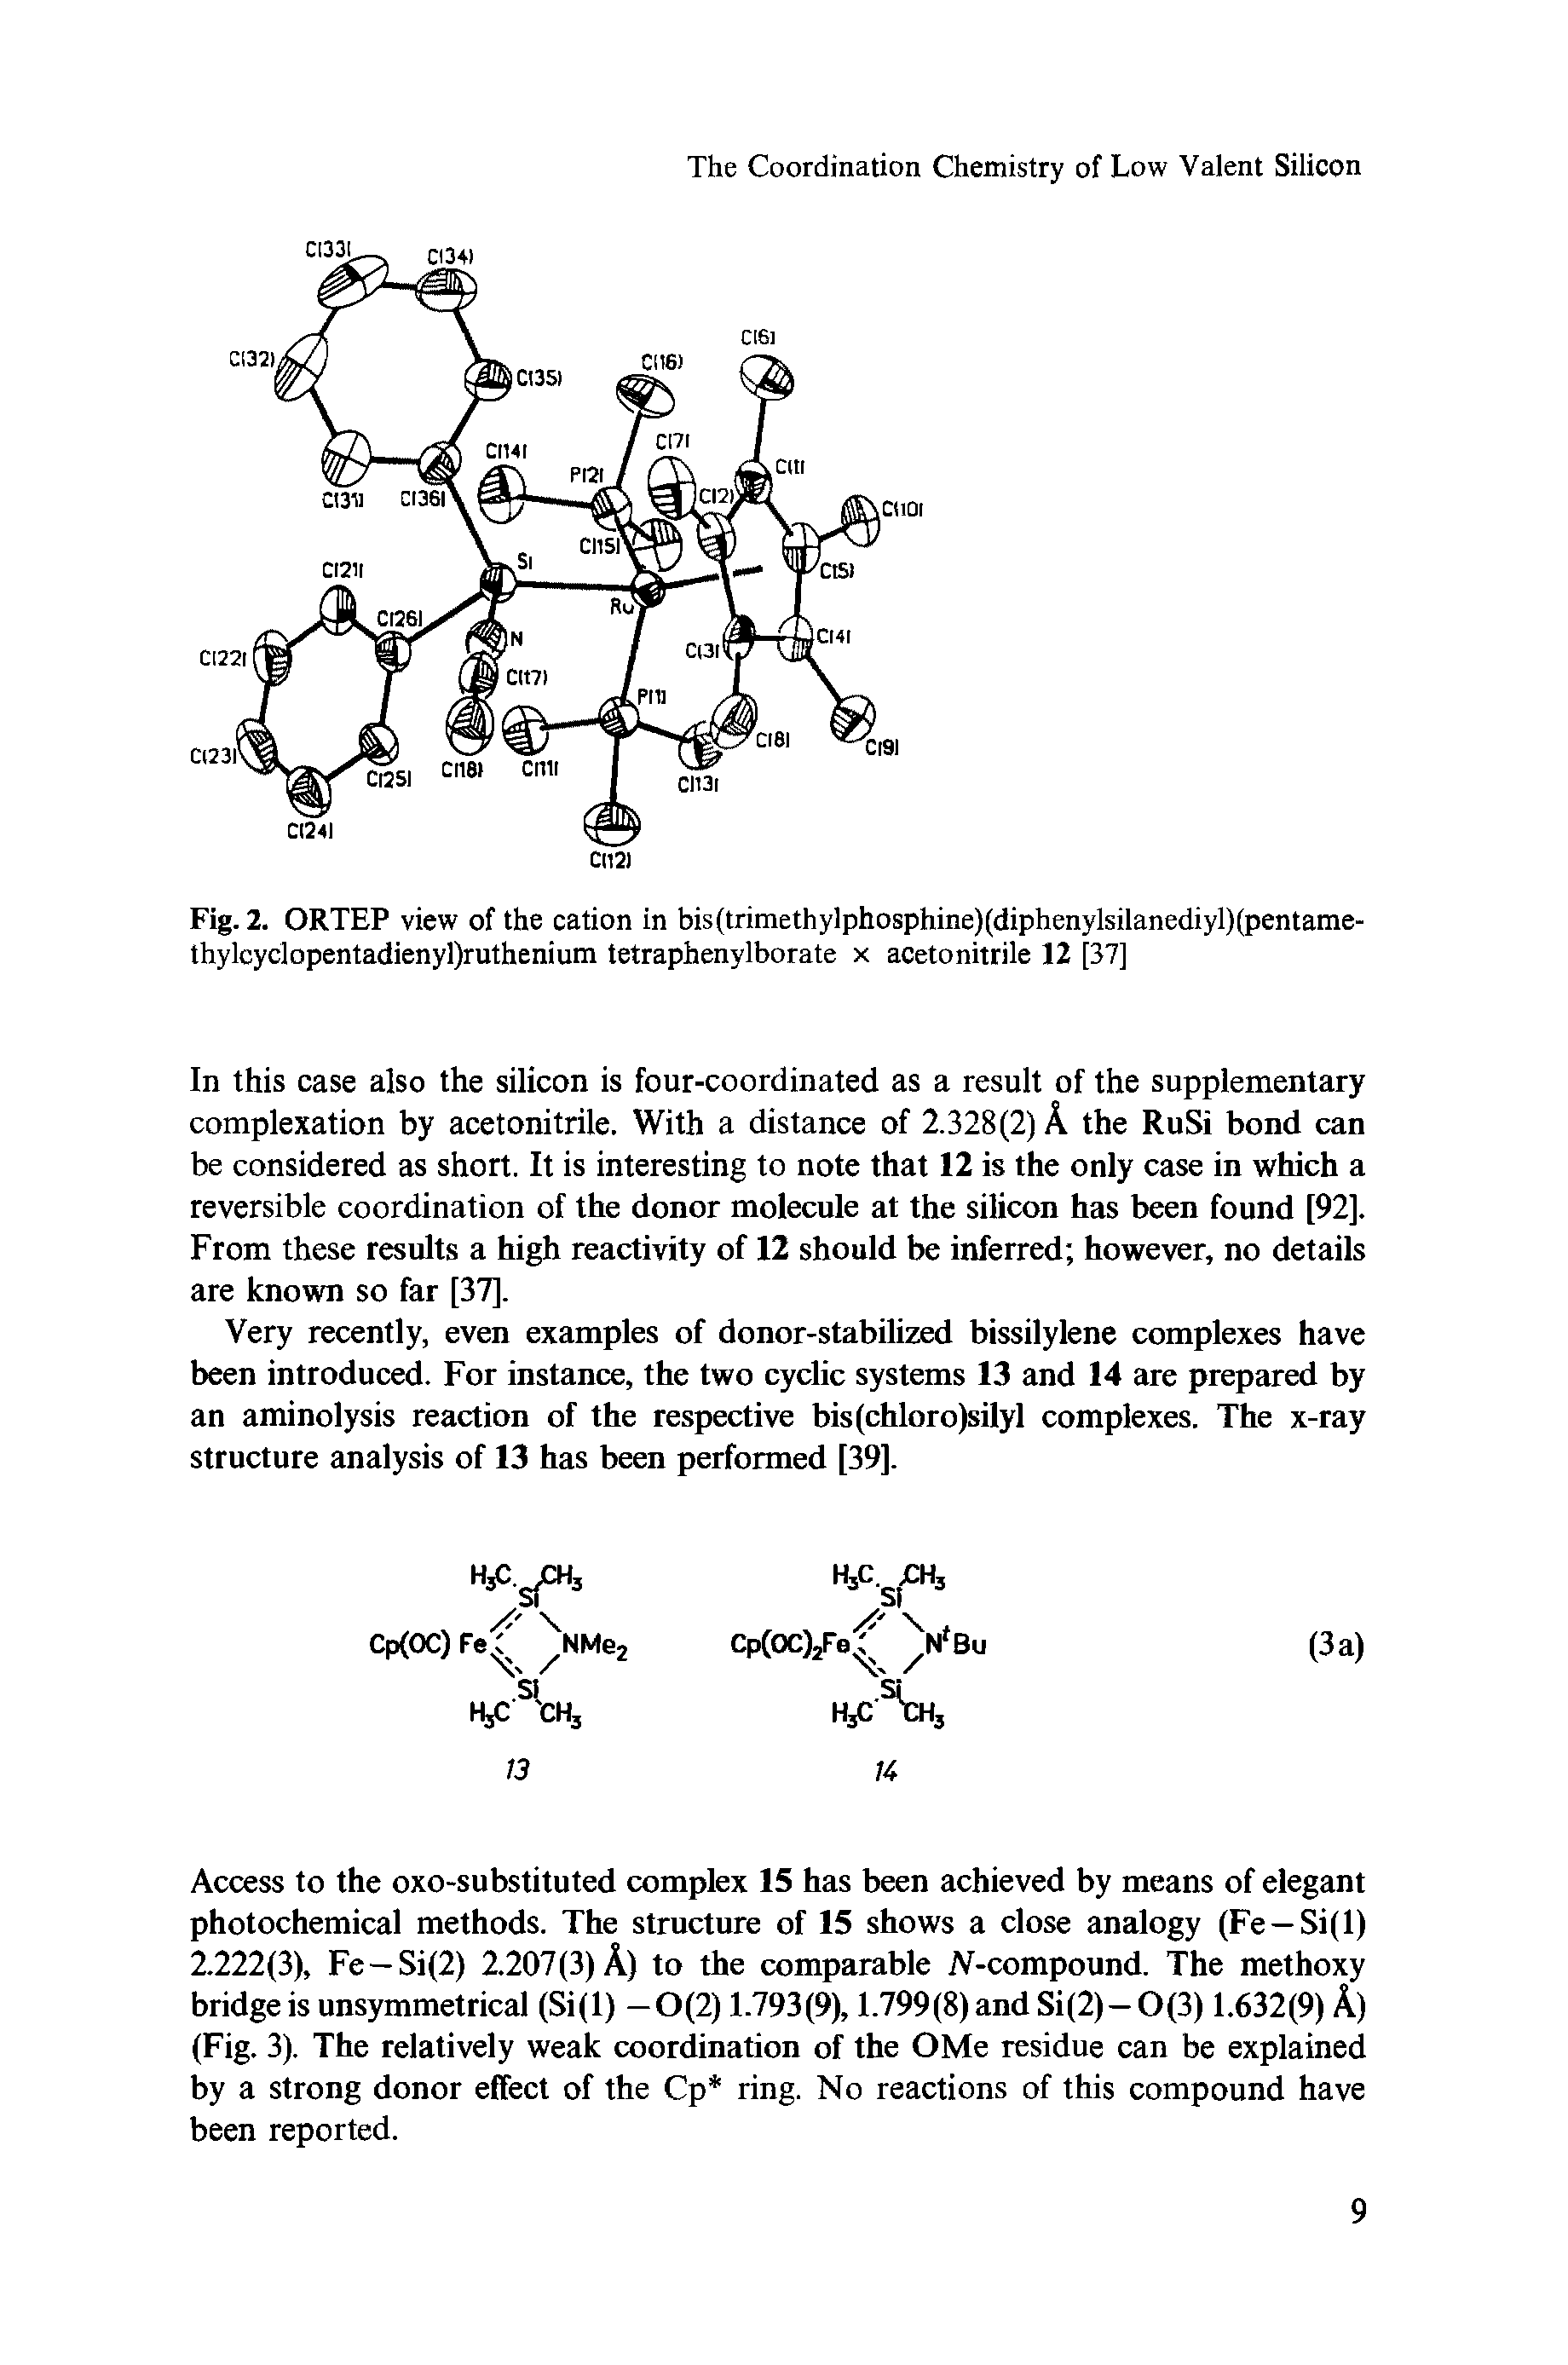 Fig. 2. ORTEP view of the cation in bis(trimethylphosphine)(diphenylsilanediyl)(pentame-thylcyclopentadienyl)ruthenium tetraphenylborate x acetonitrile 12 [37]...